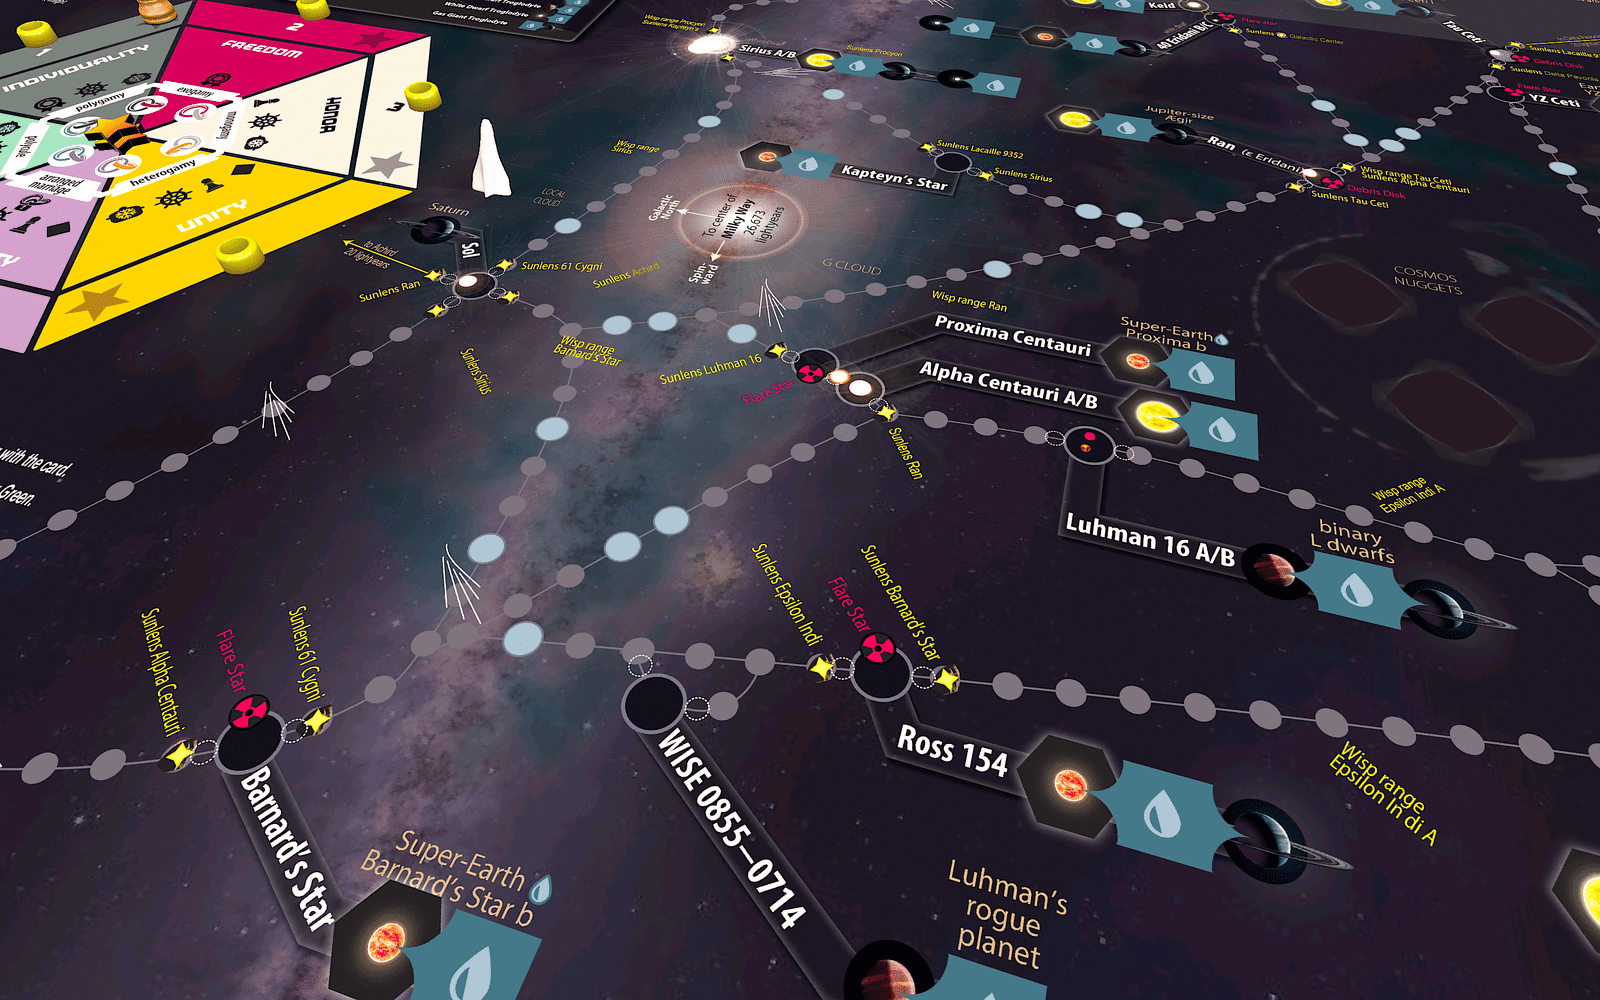 Interstellar board game: neoprene mat - image of mat